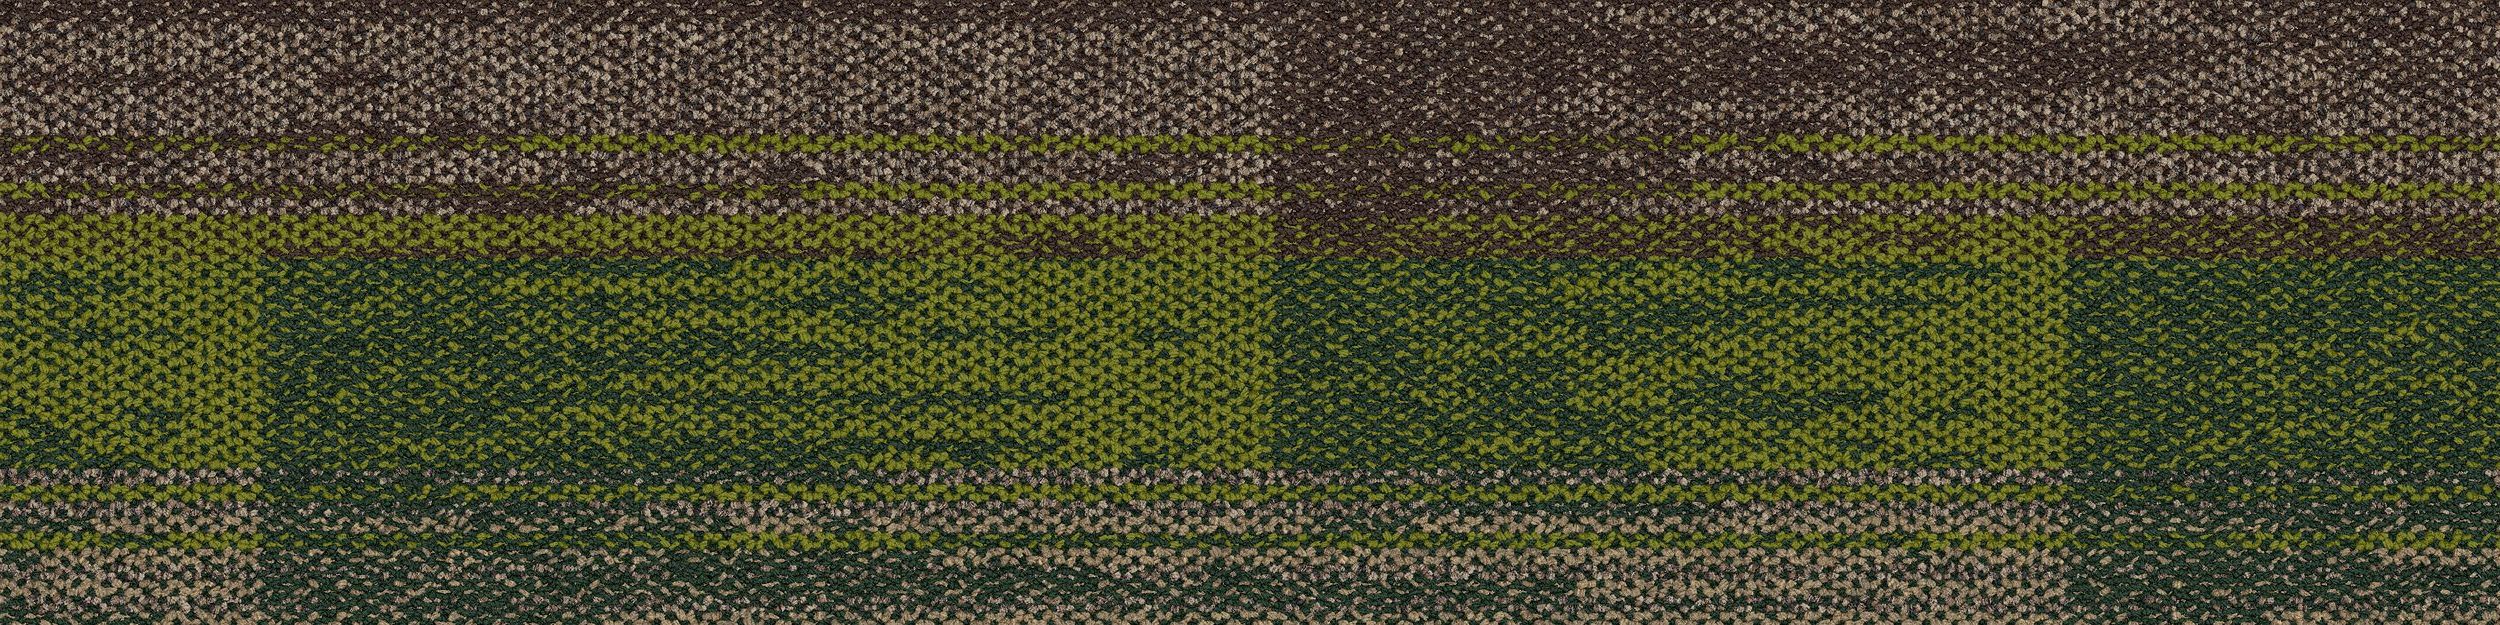 AE315 Carpet Tile In Mushroom/Grass image number 2